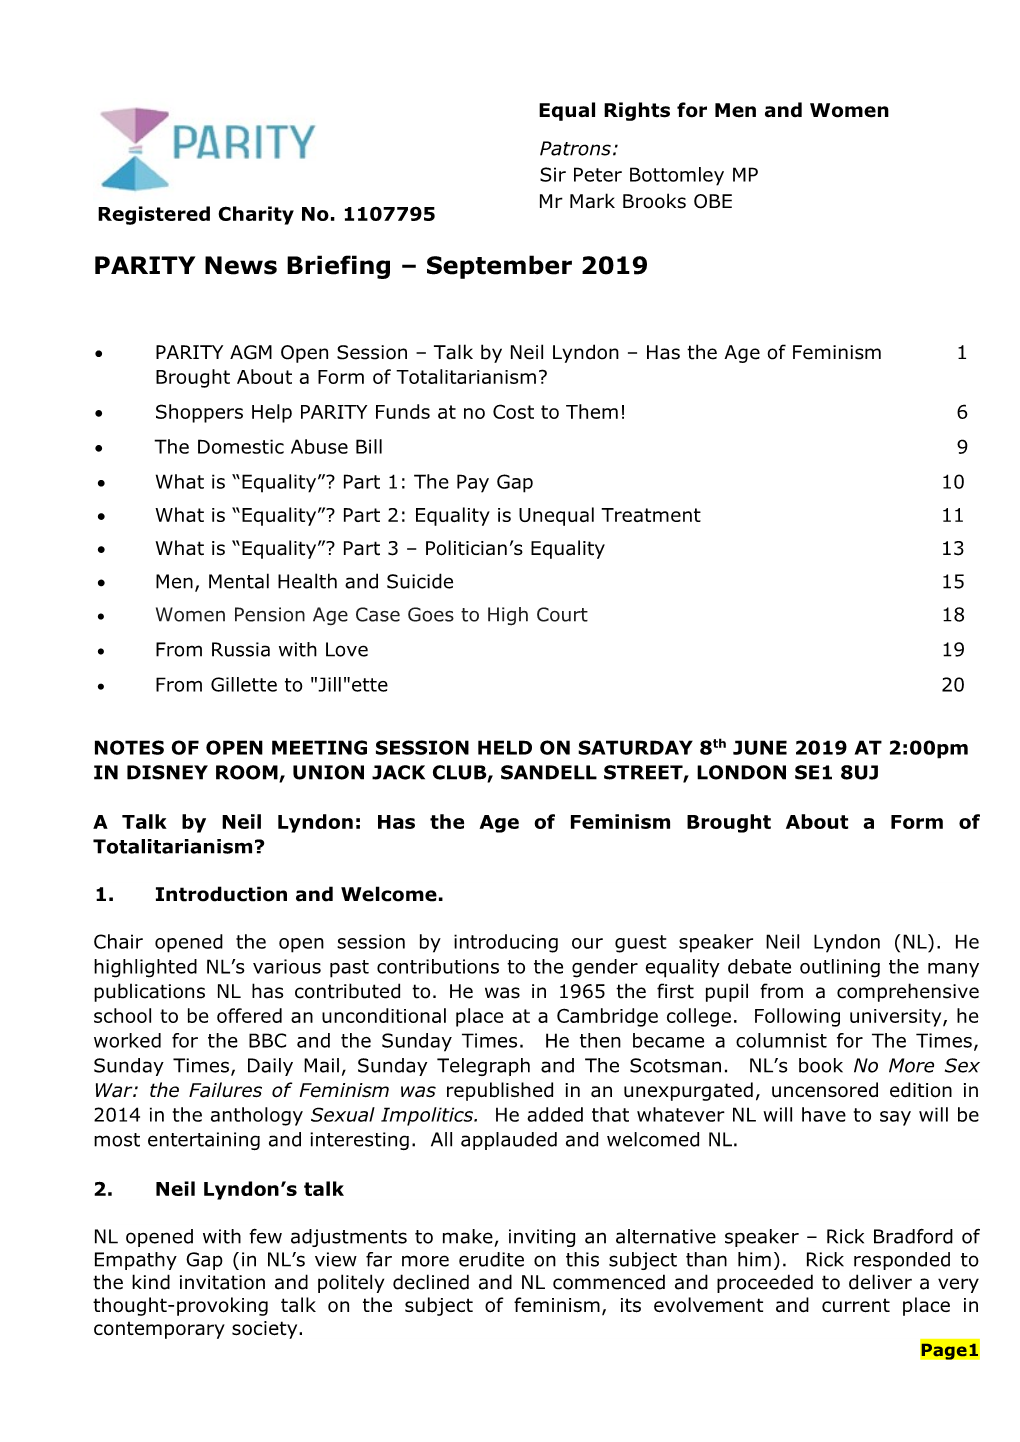 PARITY News Briefing – September 2019